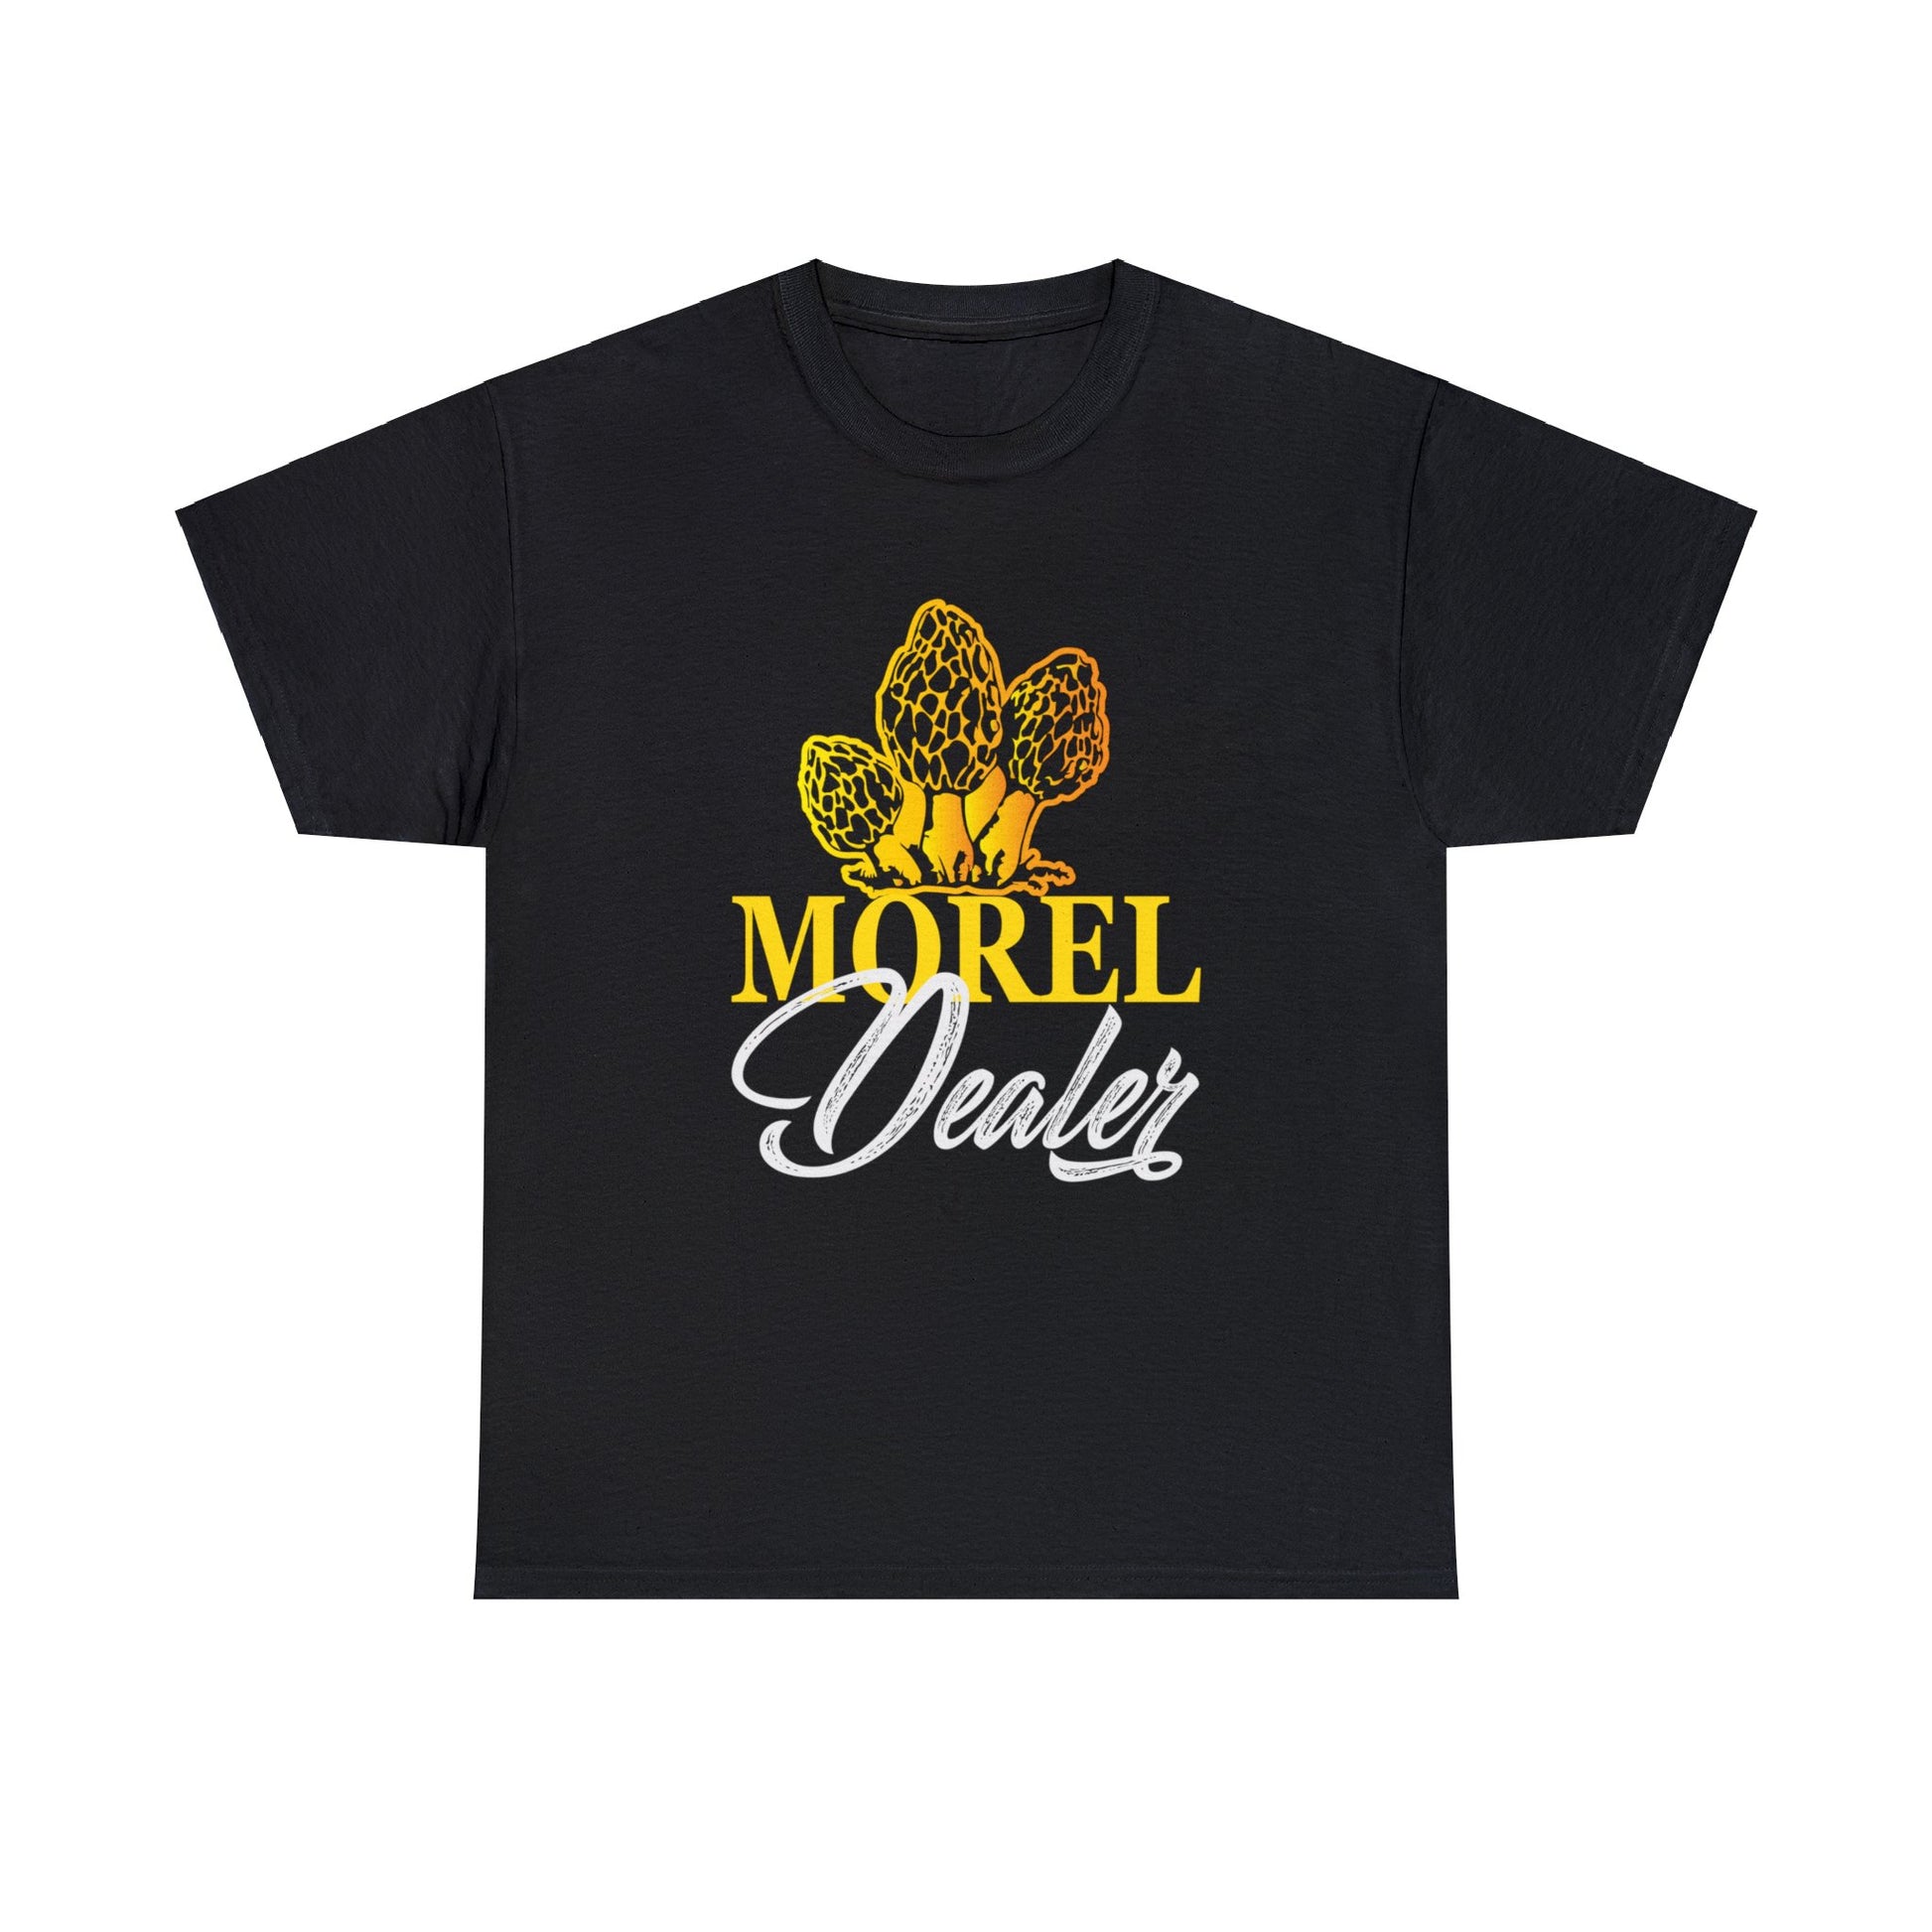 Funny morel mushroom hunting t-shirt design